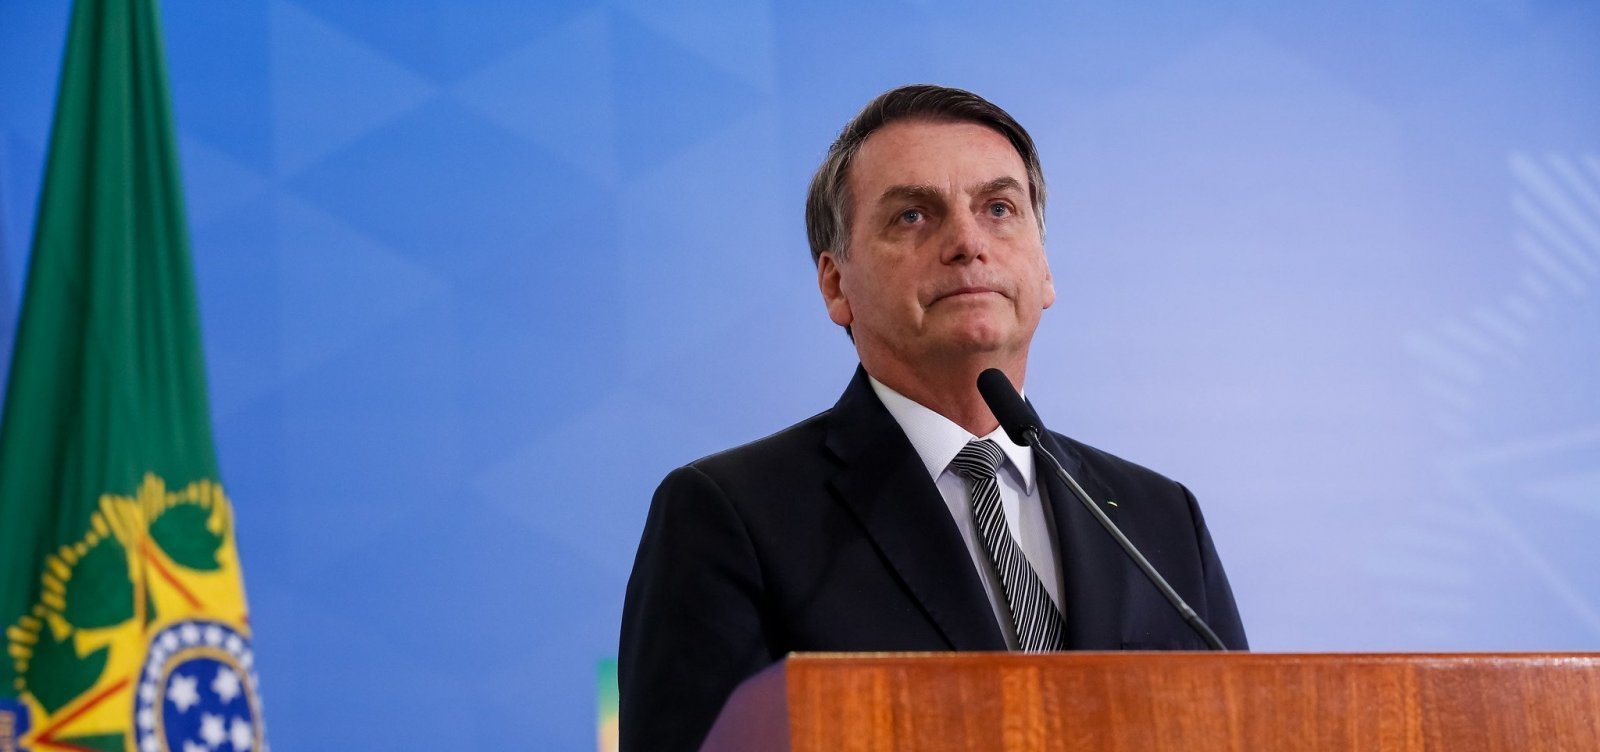 Bolsonaro sanciona lei que libera laqueadura e vasectomia sem aval do cônjuge